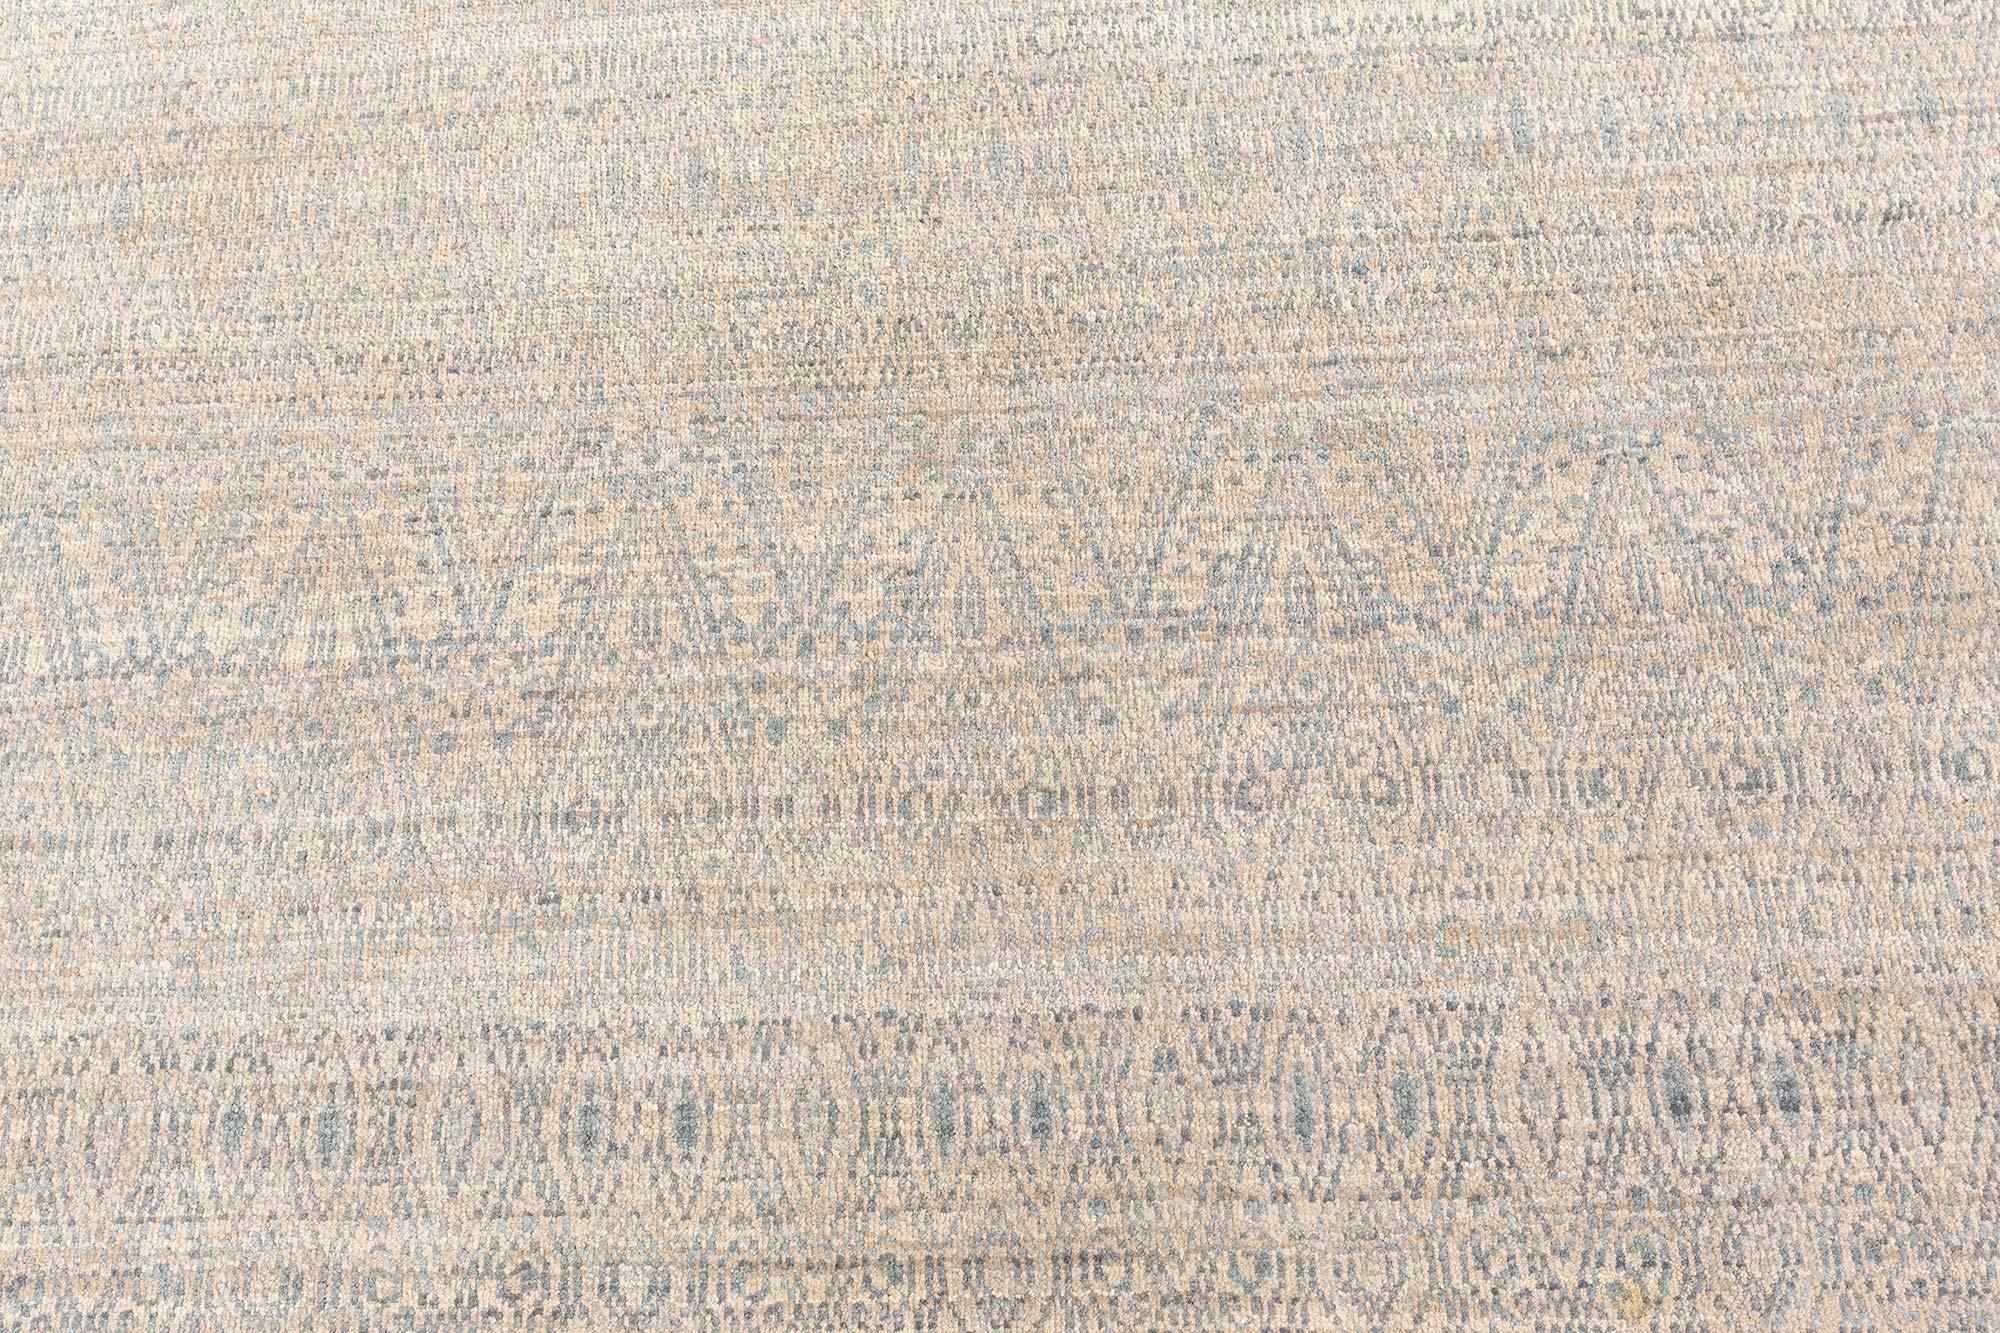 Indian Modern Traditional Inspired Handmade Wool Rug by Doris Leslie Blau For Sale